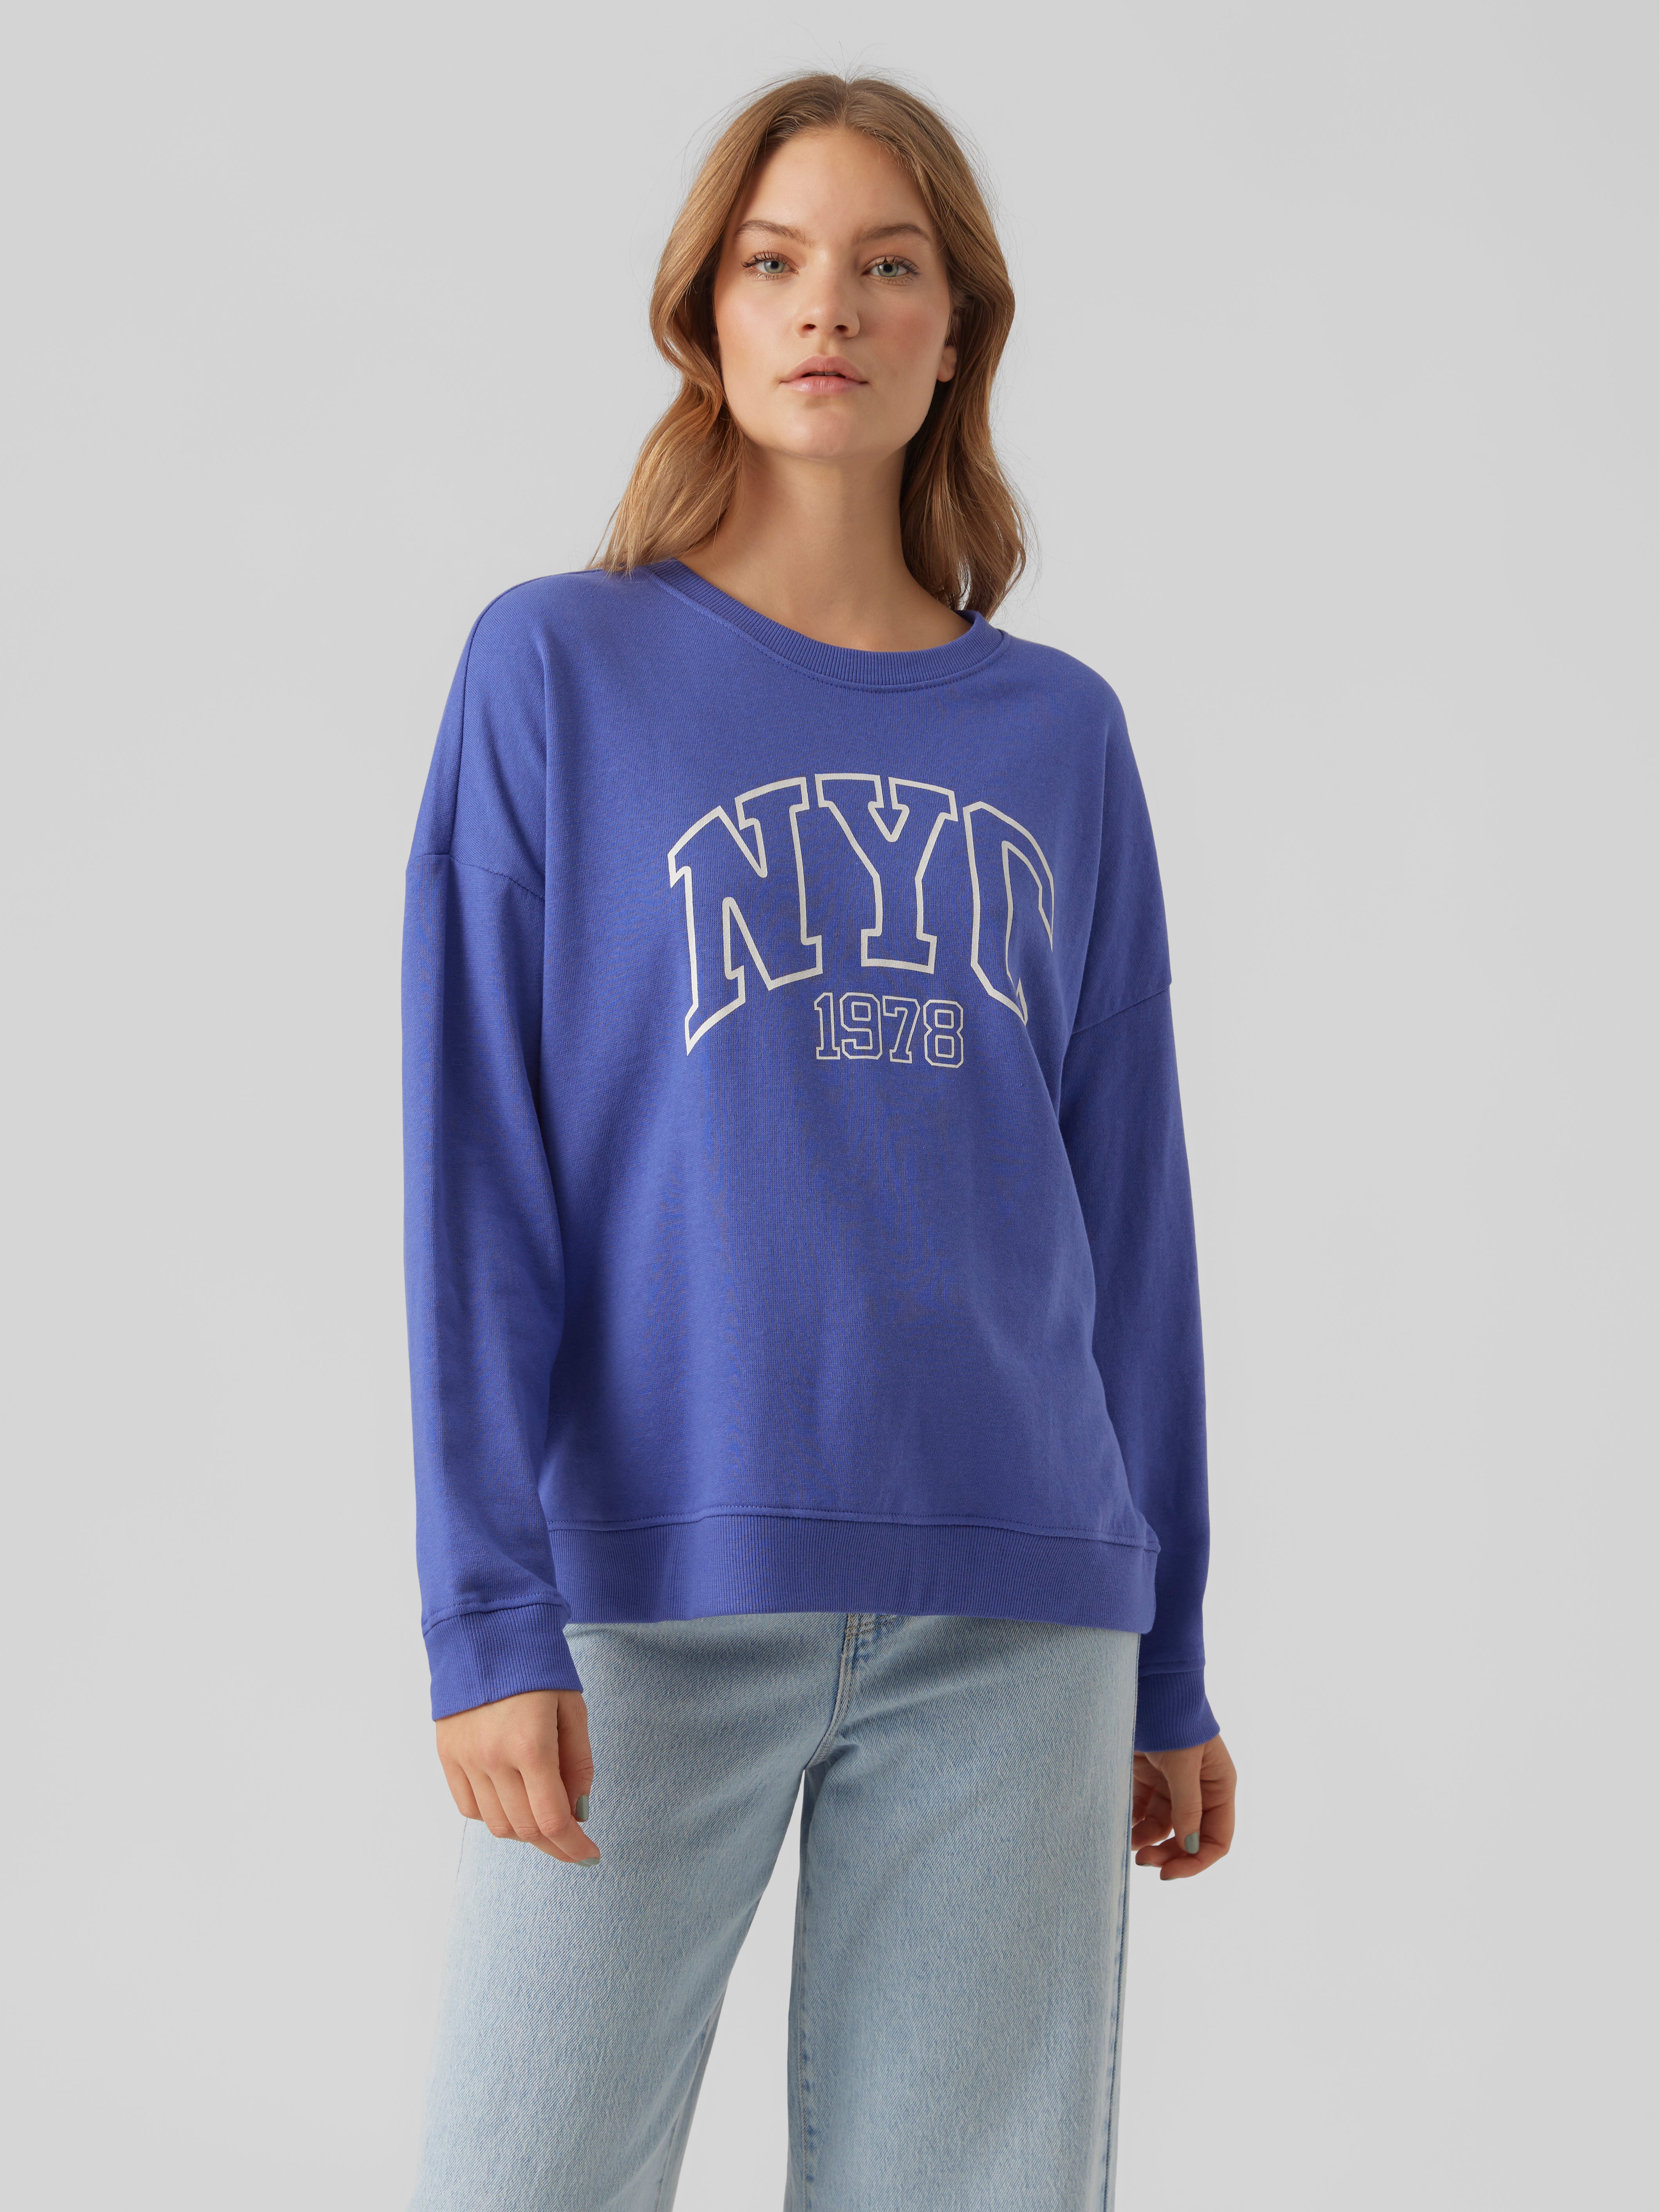 Rabatt 80 % NoName Pullover DAMEN Pullovers & Sweatshirts Pullover Oversize Grau L 